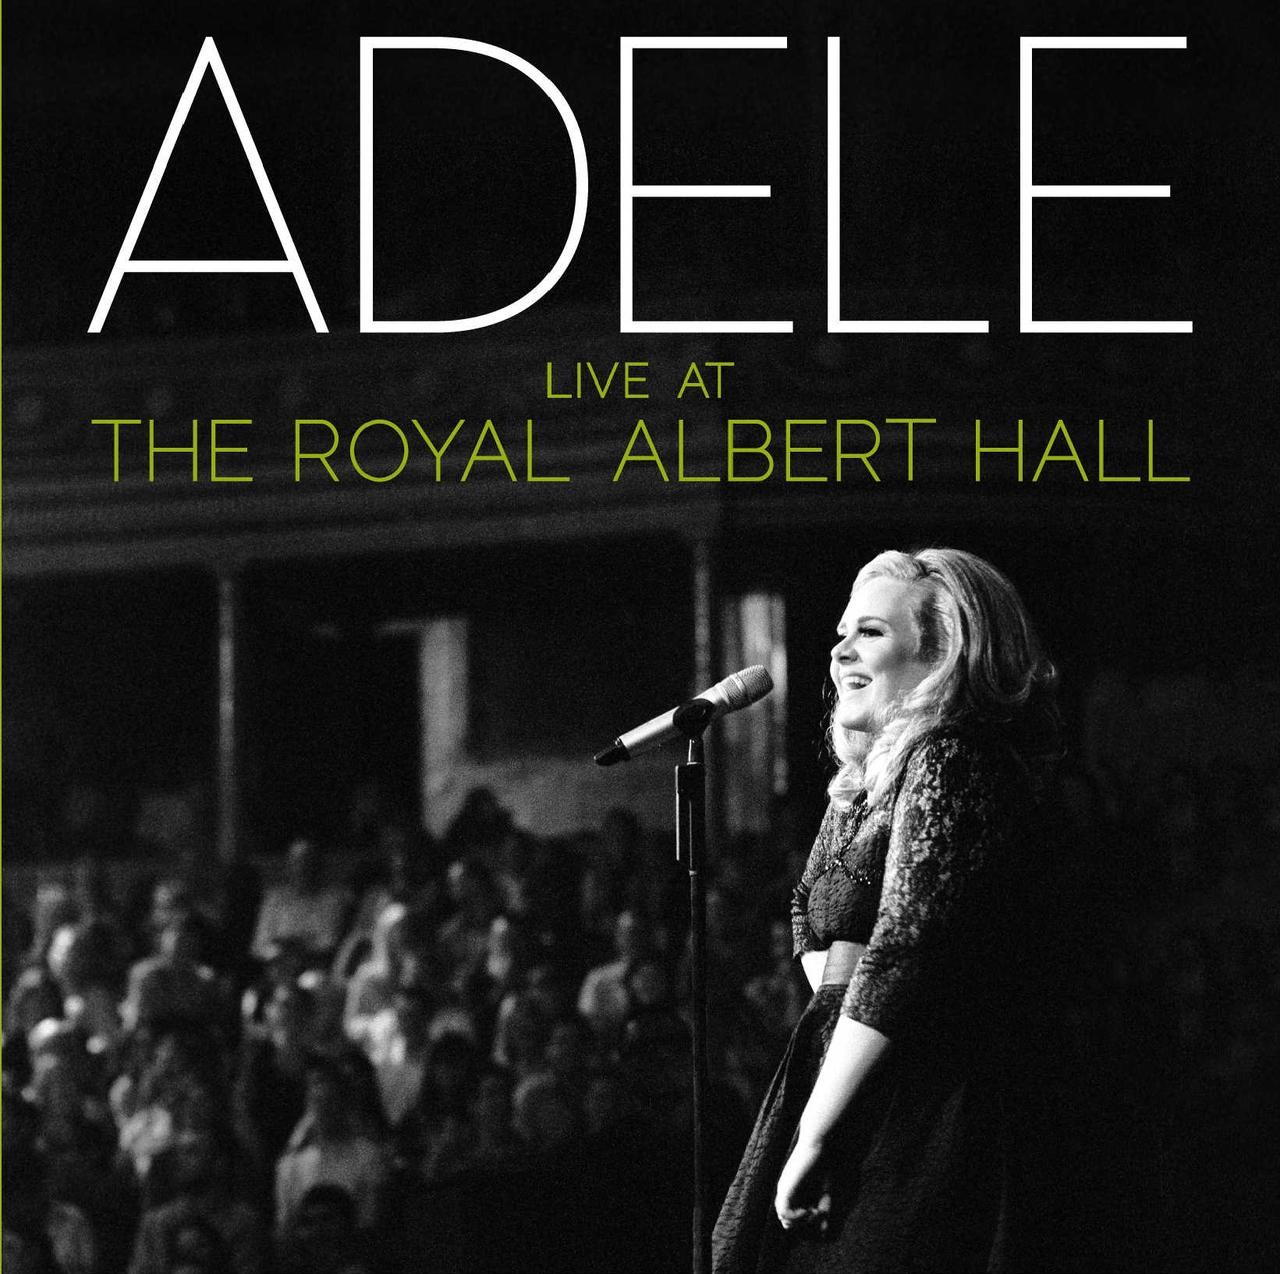 https://blogger.googleusercontent.com/img/b/R29vZ2xl/AVvXsEjEosF3bkQVb1UazE2MMpWodB6aazRDeUjoy93OQ10Ke9QGERfZaJsgQ49gpcuwqvckpT0iittI7tBEadgu6wrYsC8HctHVvnPdbb7M2HzENdILgD1RI4cT2hX7c3tPOlT9dcTUnvQK69m6/s1600/Adele+-+Live+at+The+Royal+Albert+Hall+(2011).jpg